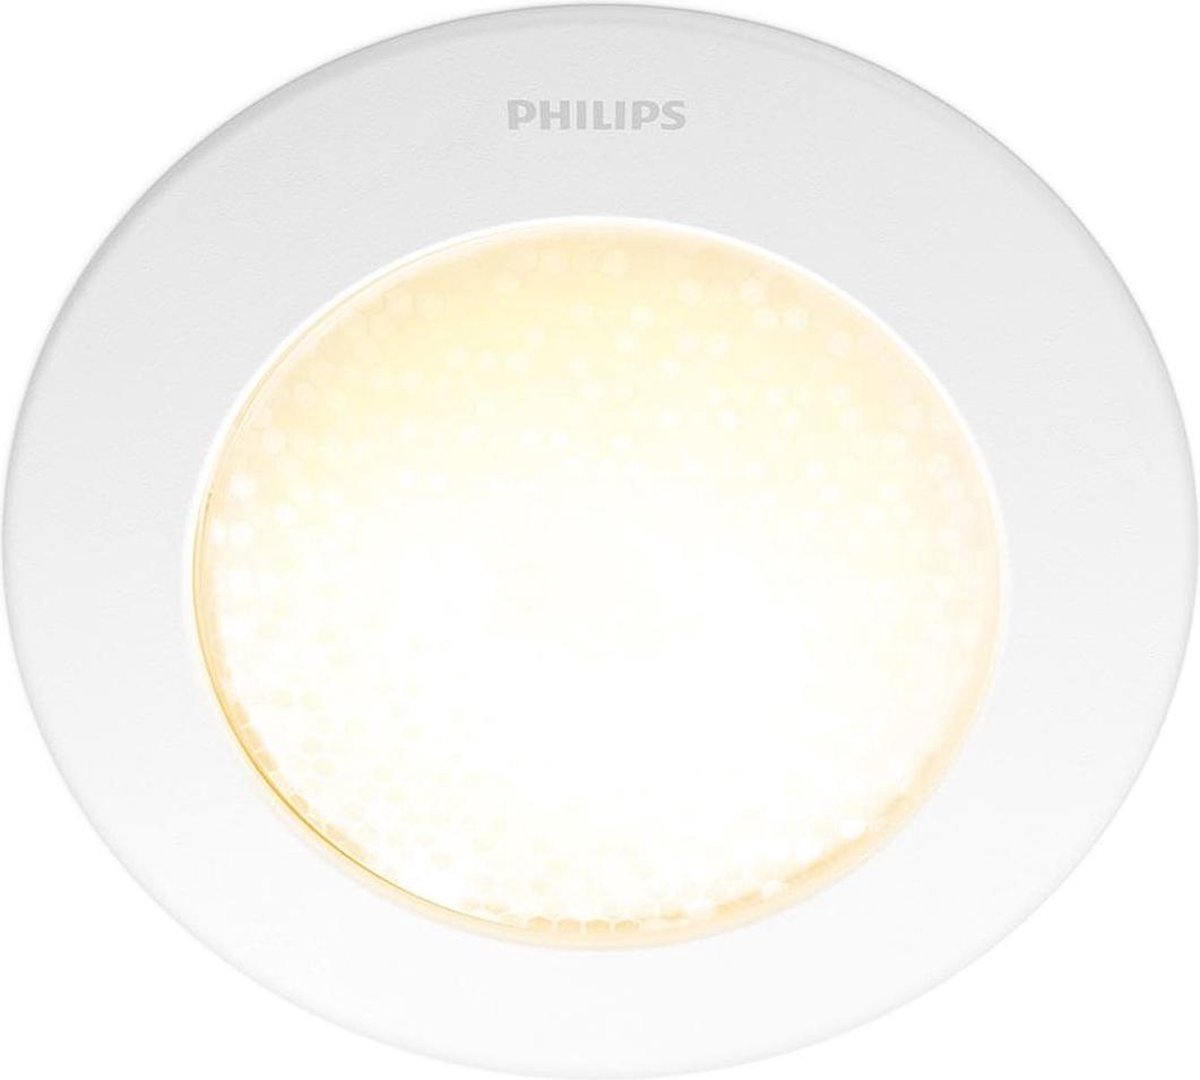 Acheter Philips Hue Phoenix White Ambiance Plafonnier (variateur excl.)  Blanc